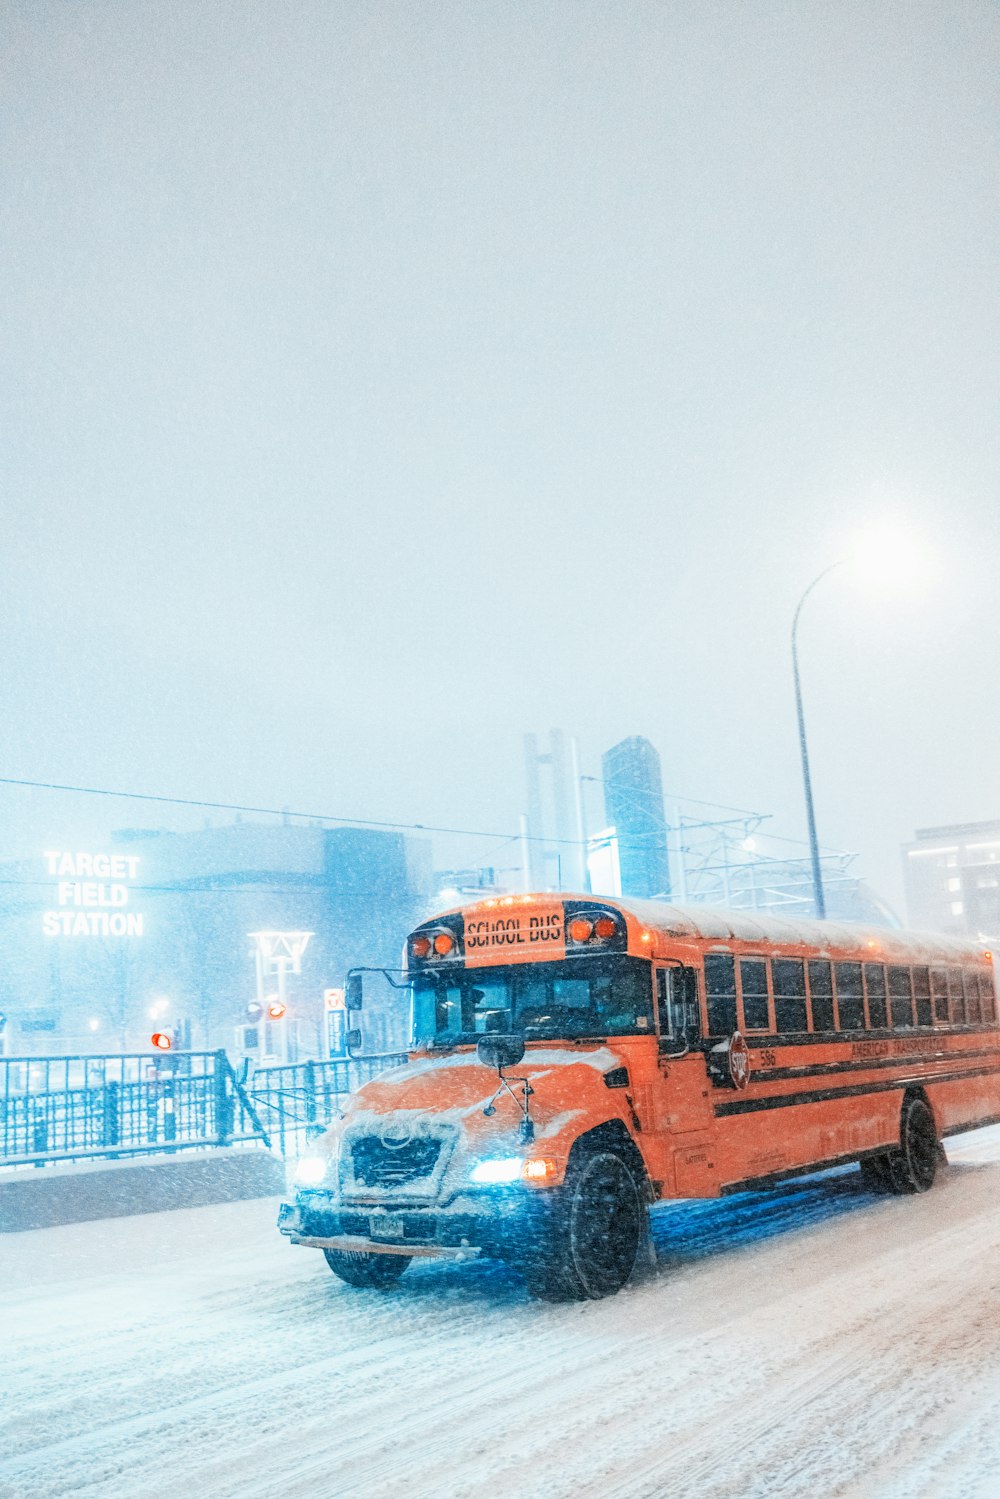 a school bus driving down a snowy street